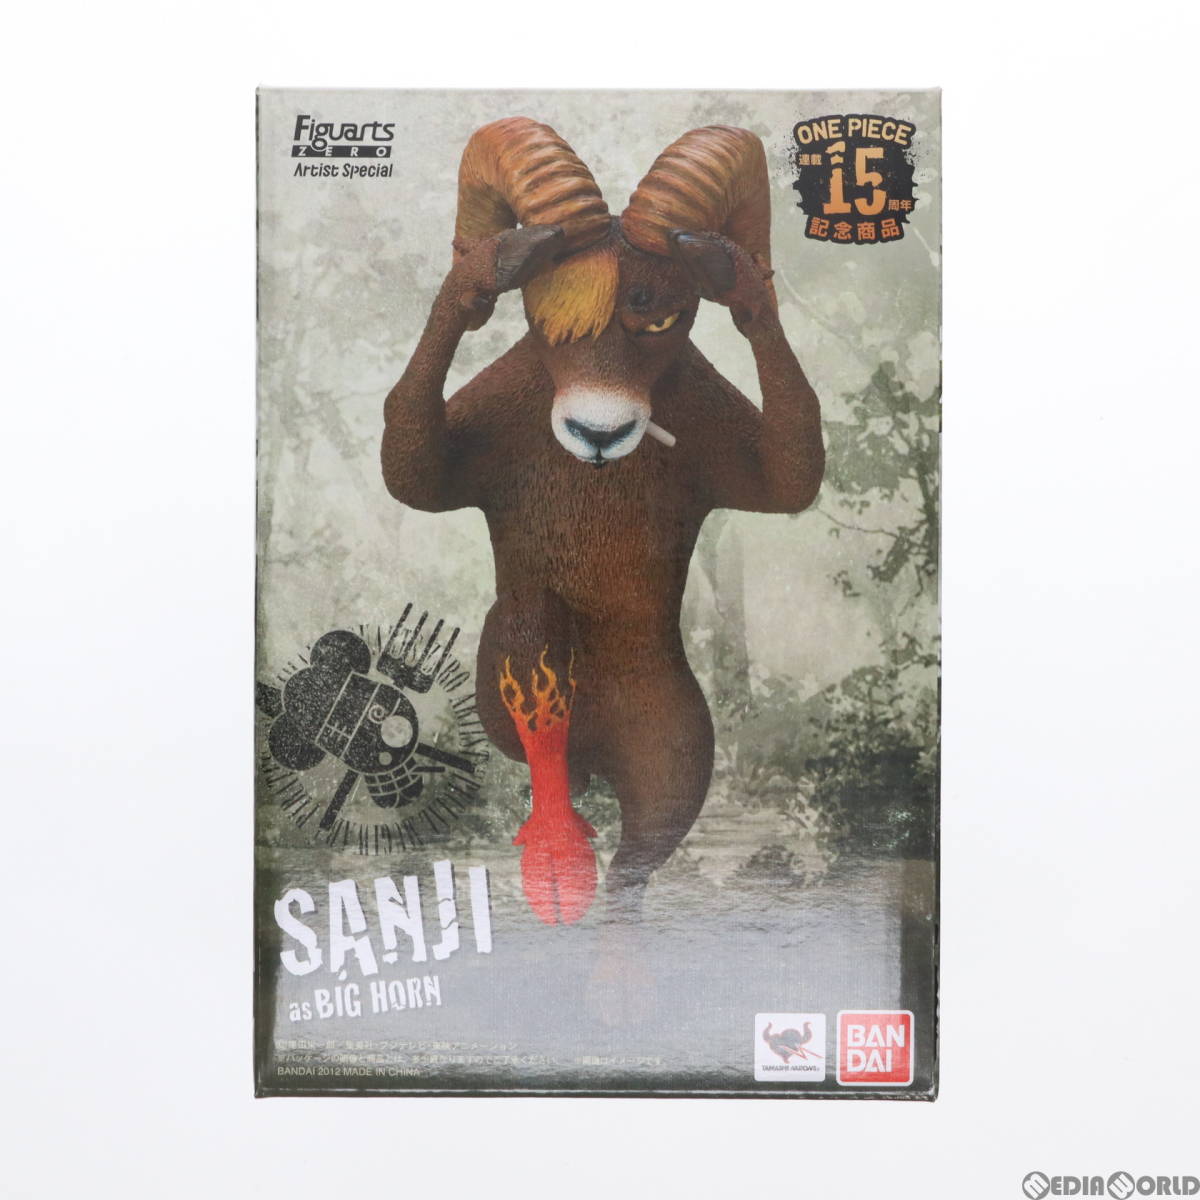 [ used ][FIG] soul web shop limitation figuarts ZERO Artist Special Sanji as Bighorn ONE PIECE( One-piece ) final product figure ba